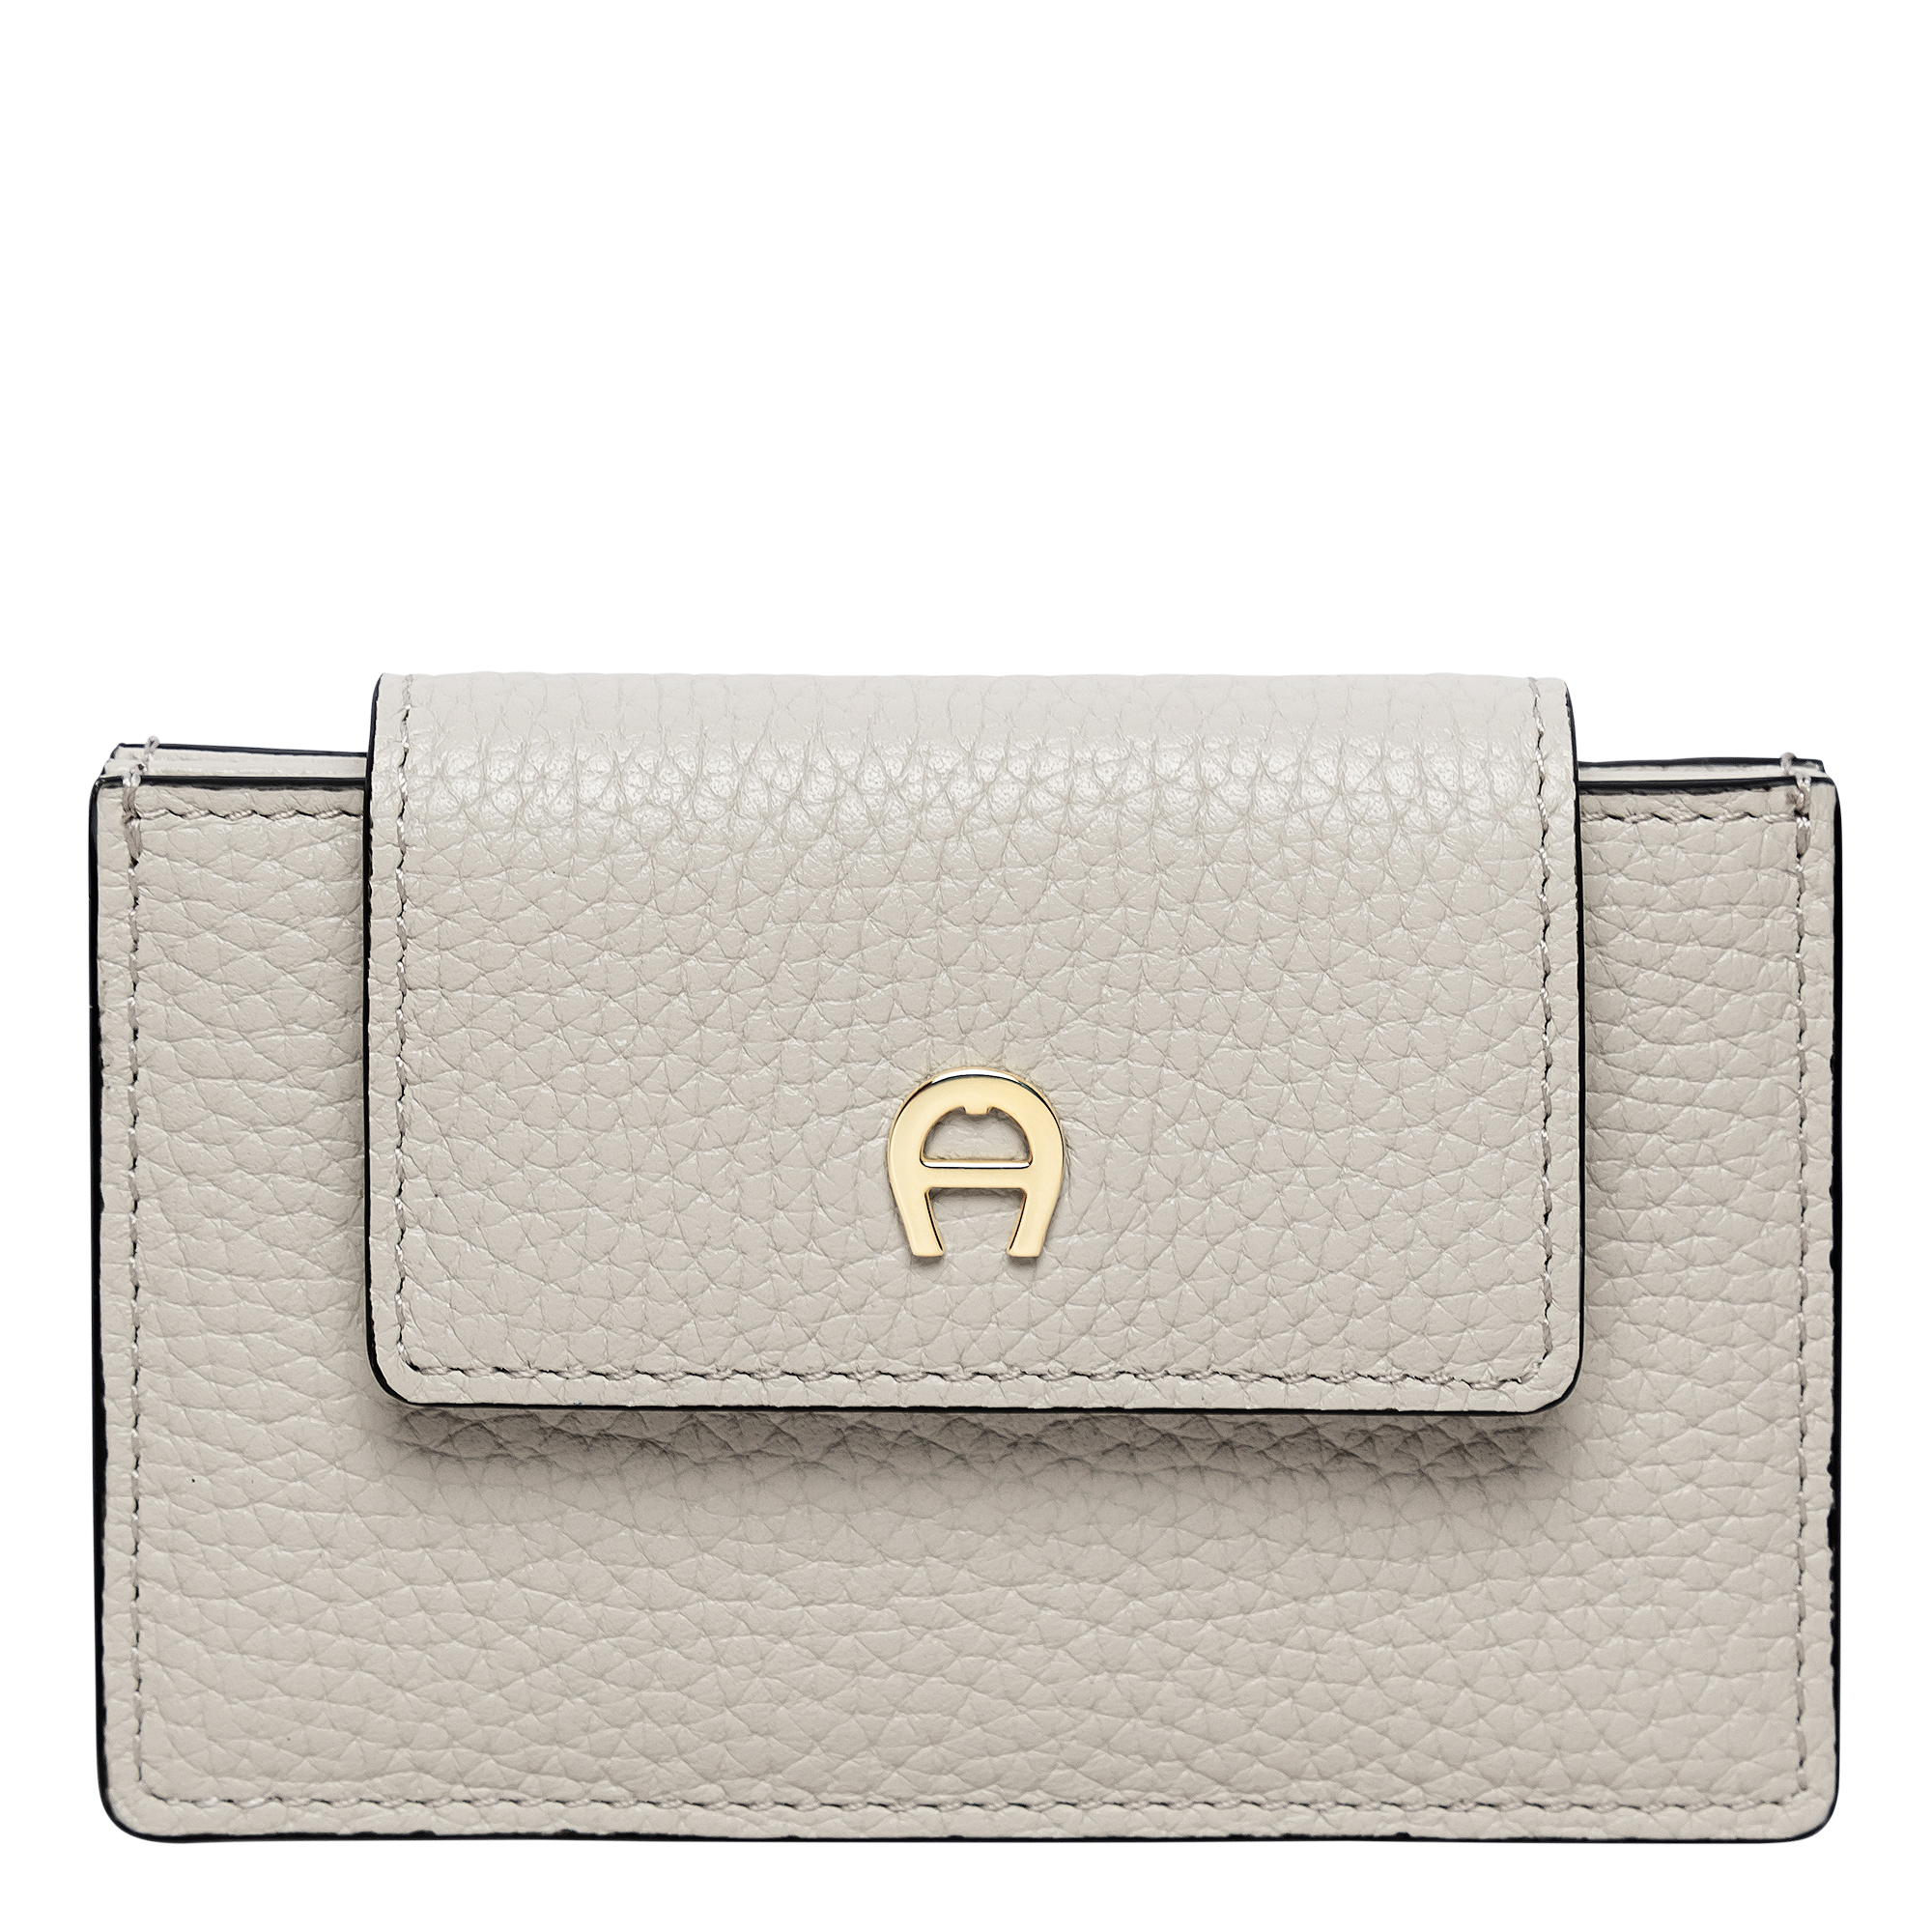 Multicolored Leather Women's Wallet – Online Shopping Website